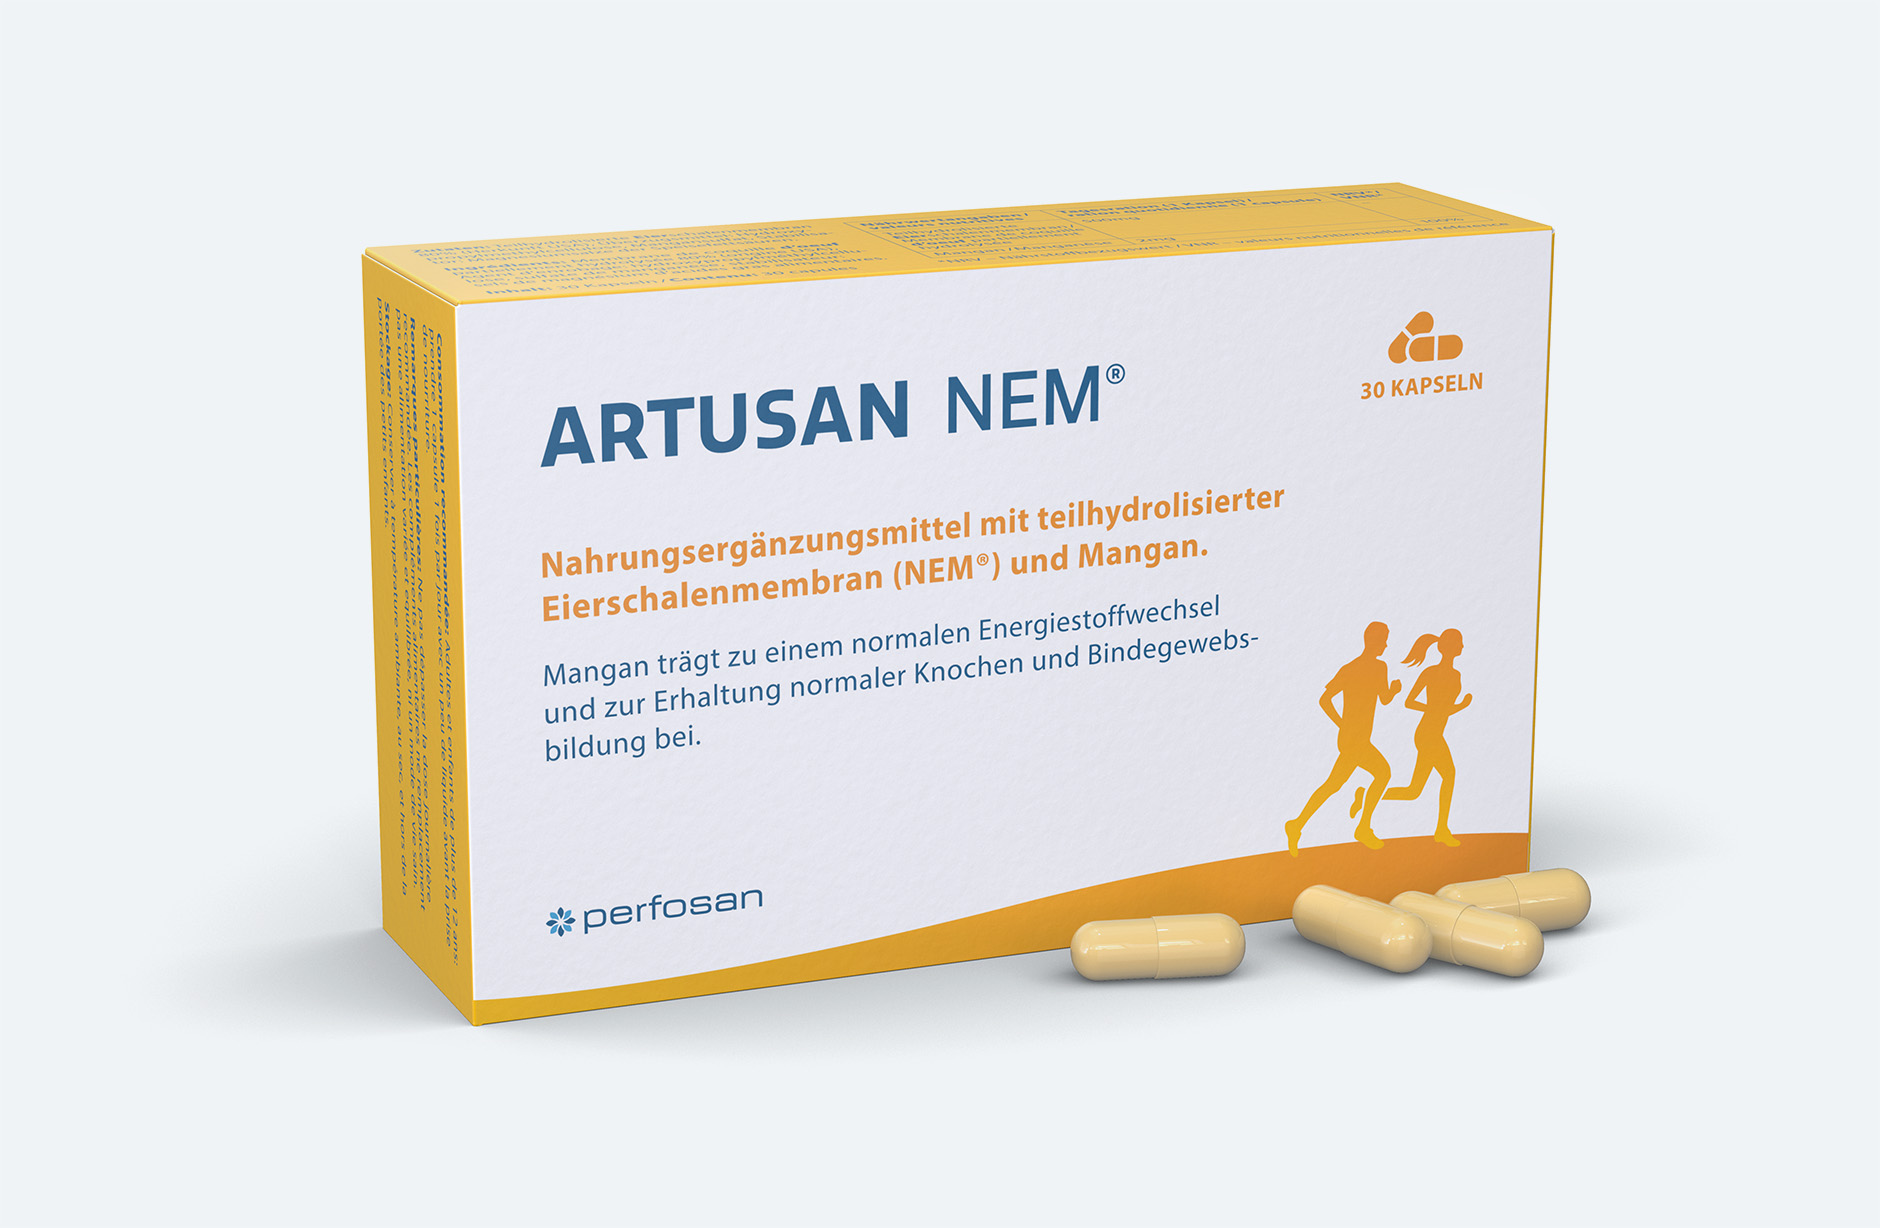 Artusan NEM Logo & Packaging Design– Newsign GmbH